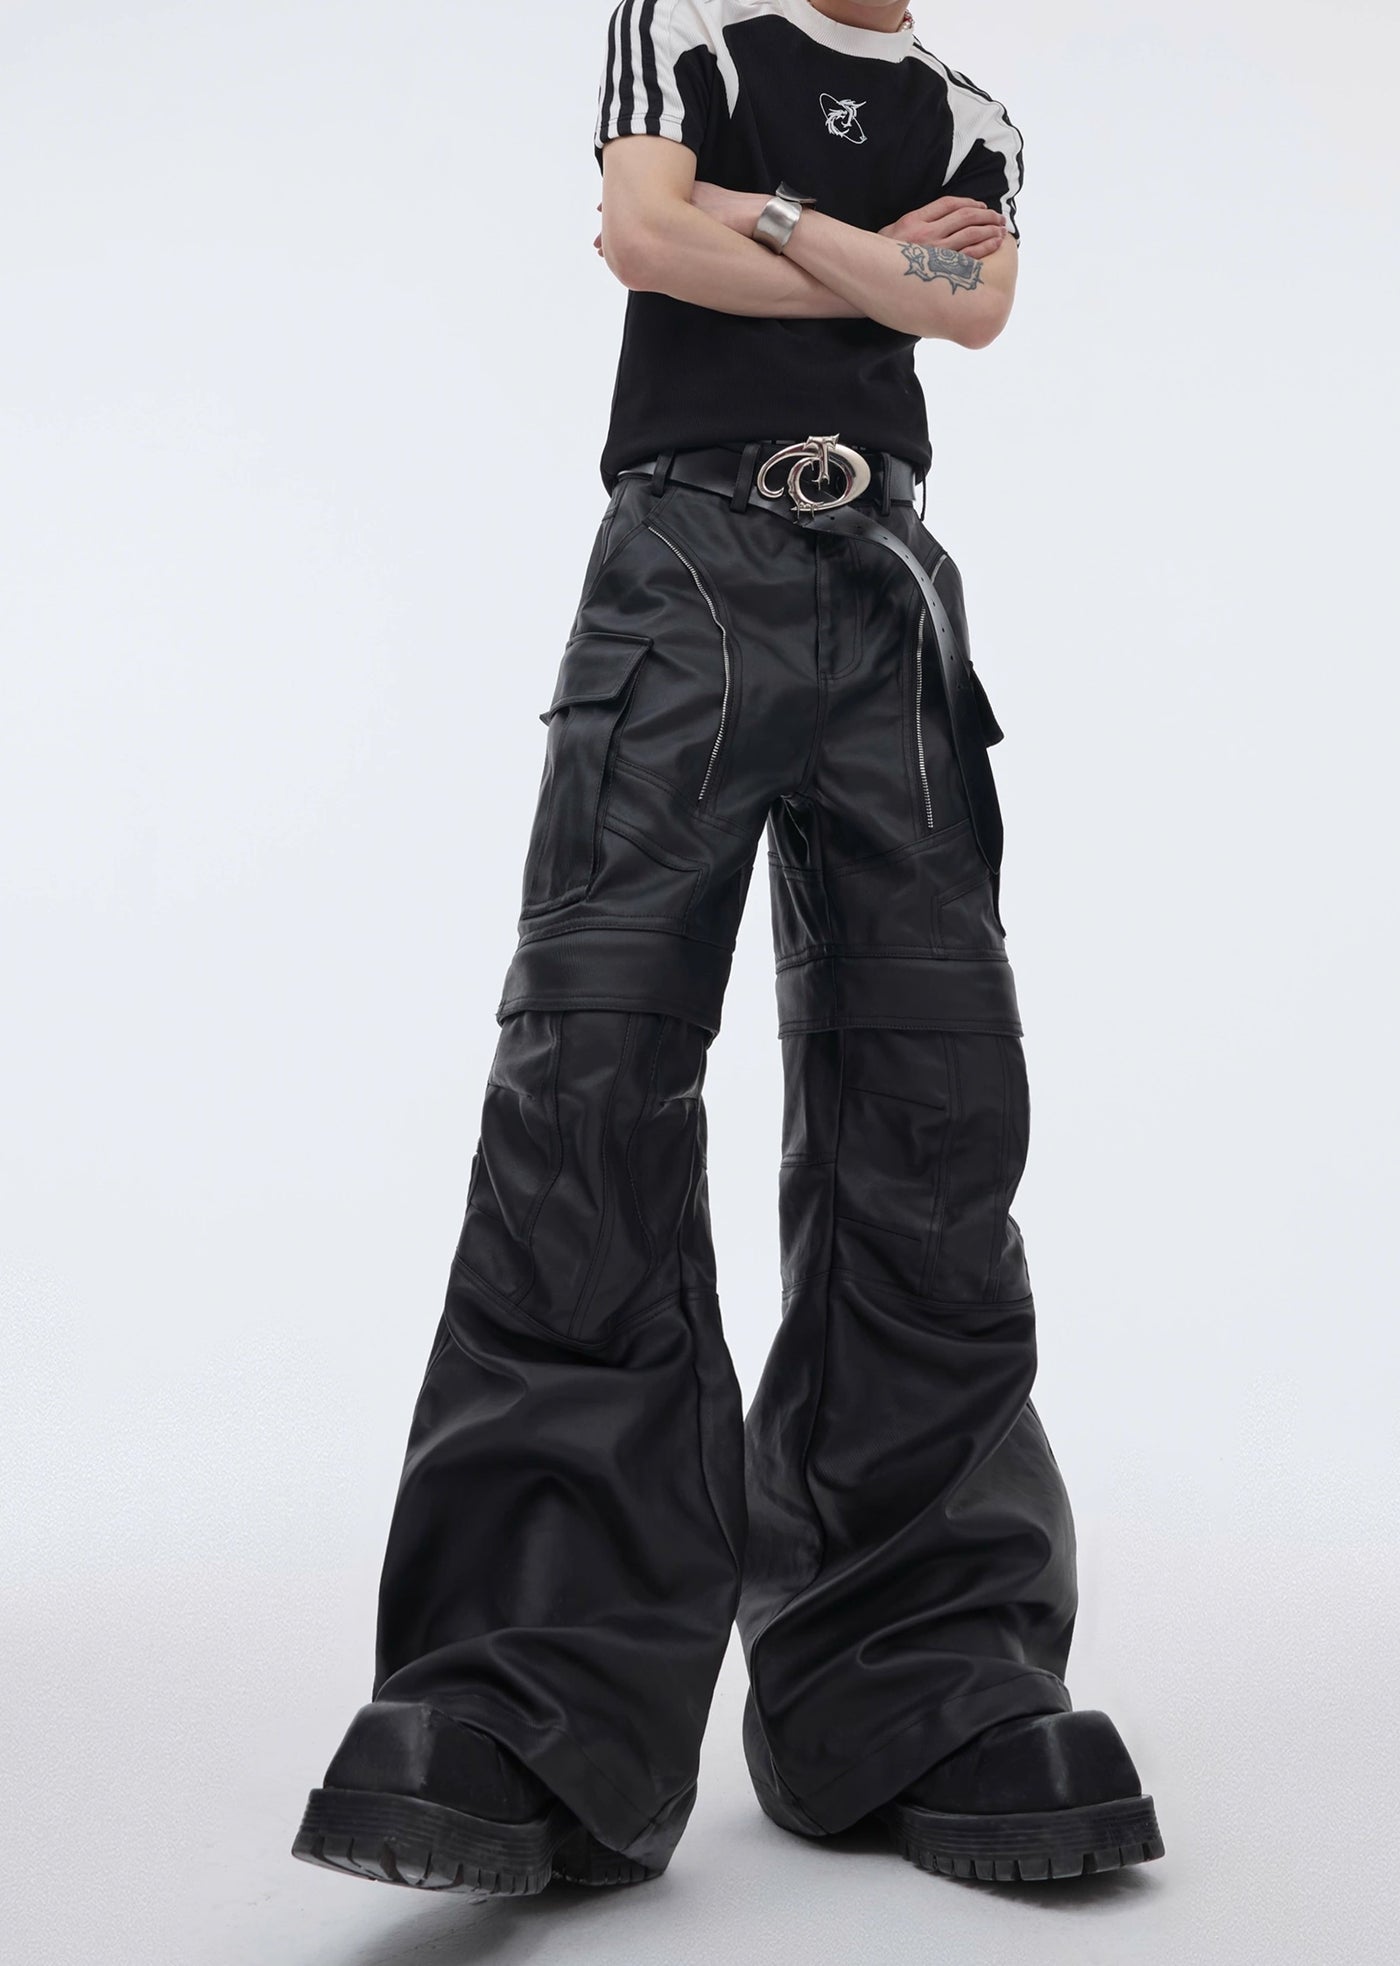 【Culture E】Knee cut gimmick design black ankle leather wide pants  CE0122